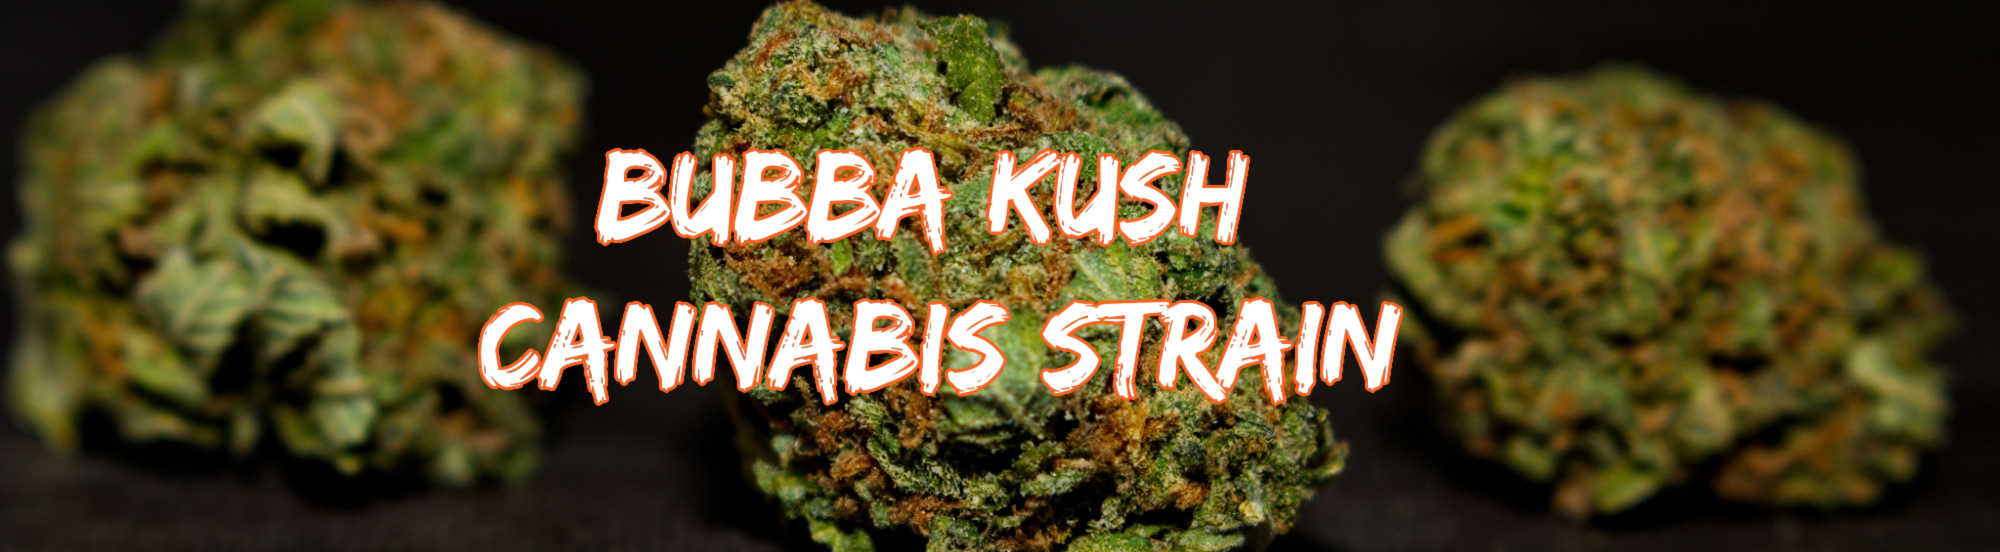 image of bubba kush strain